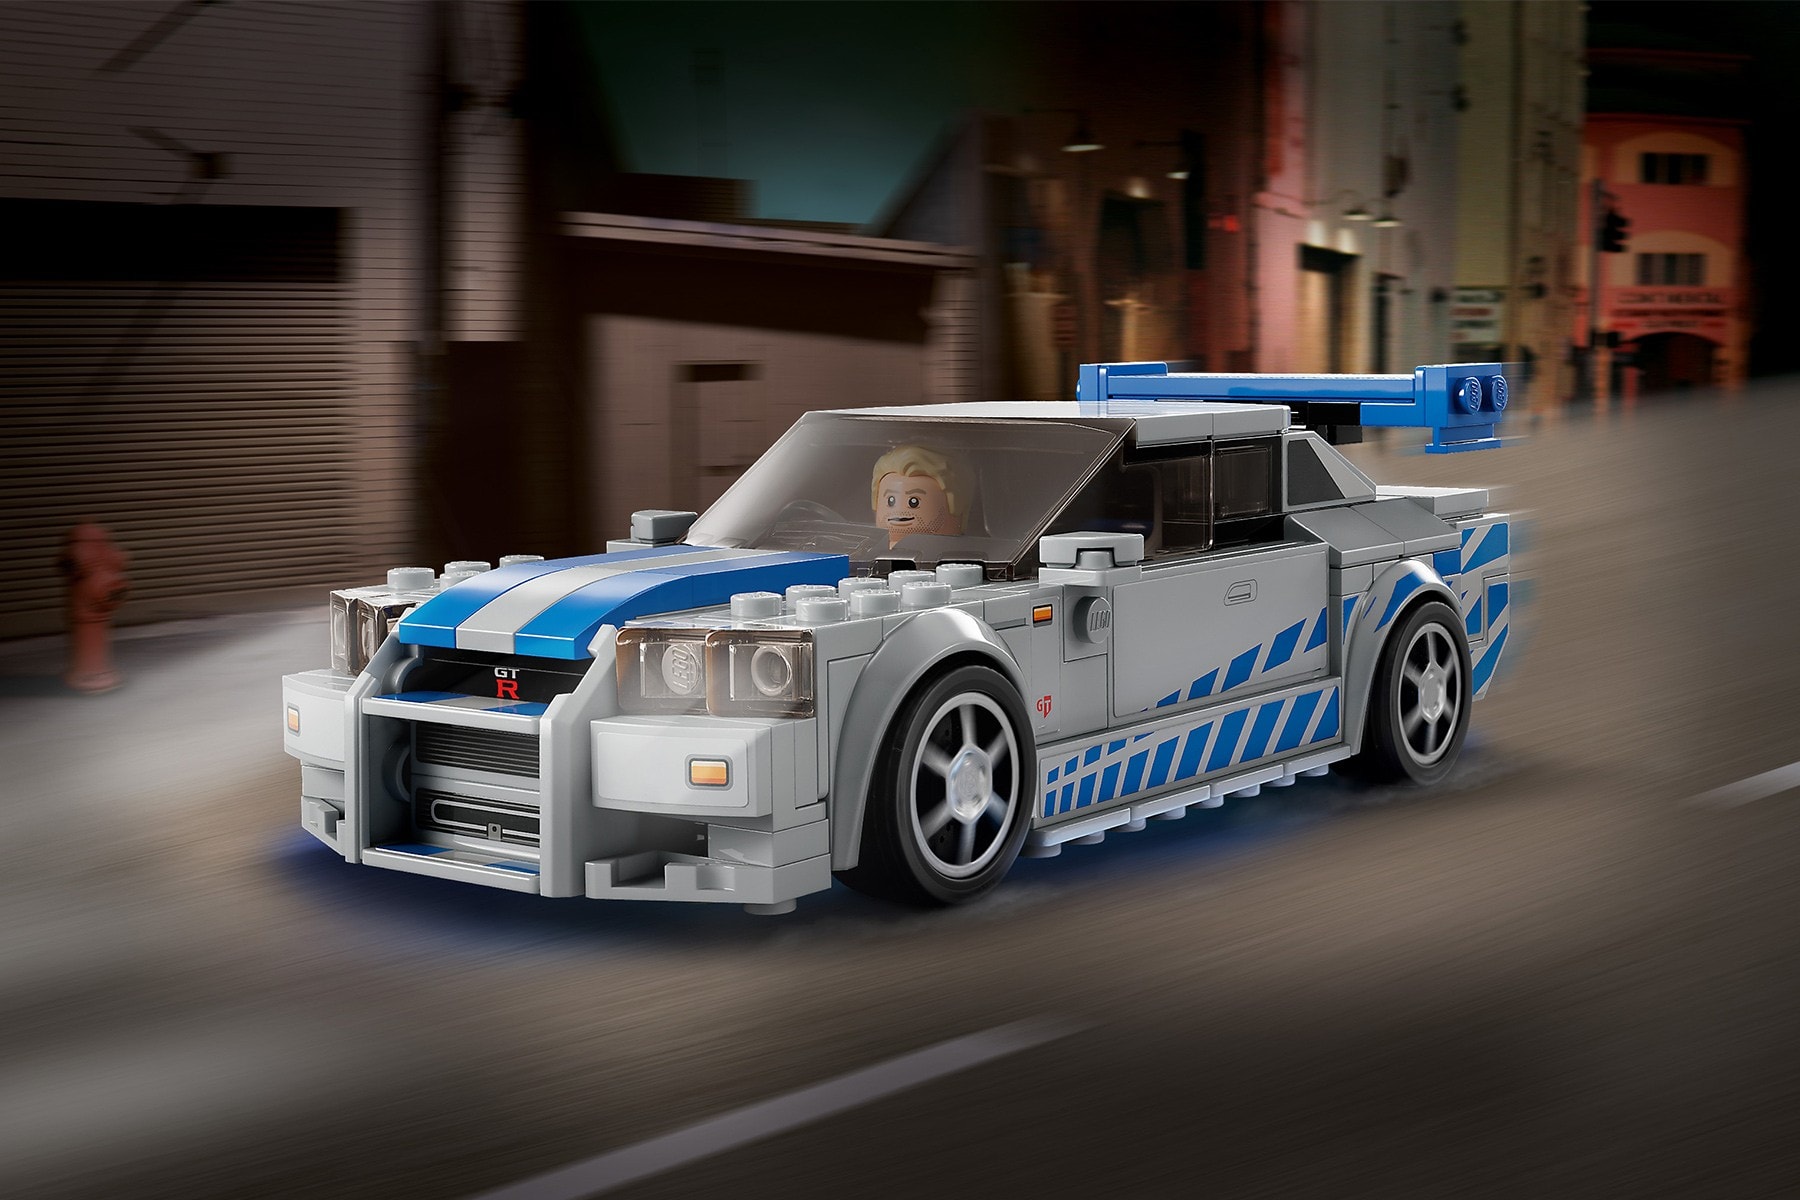 LEGO Nissan Skyline GT-R34 - 76917